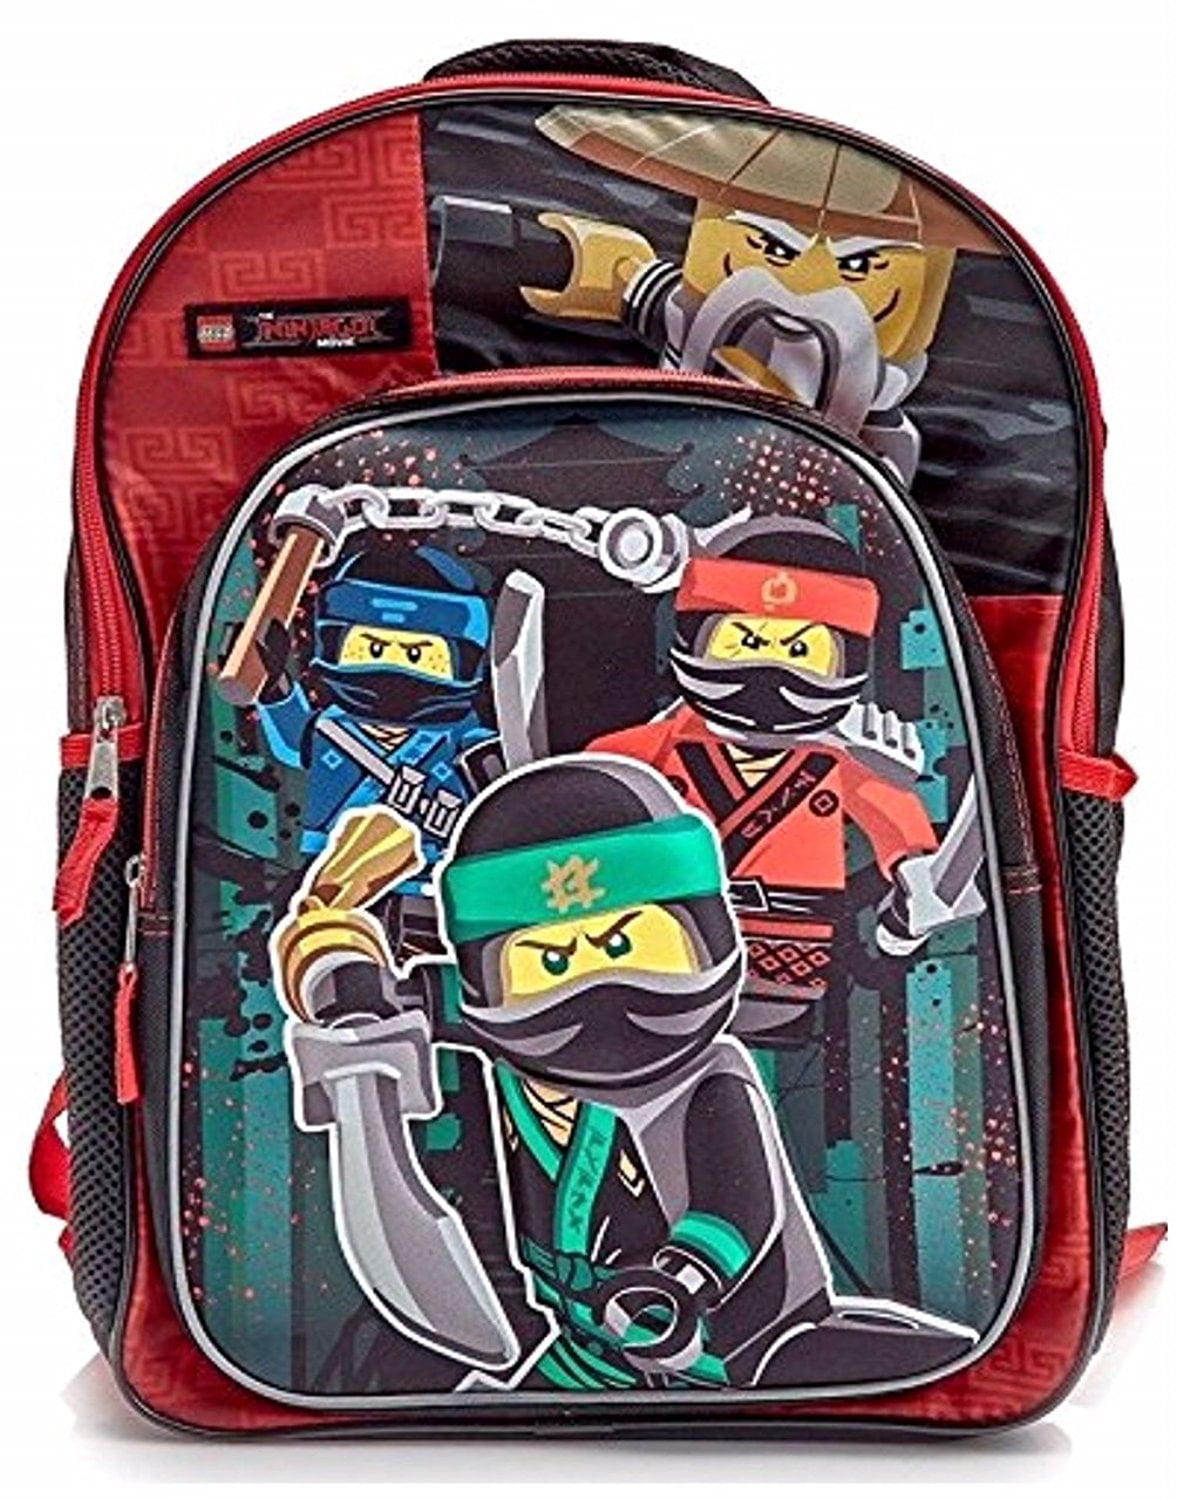 Ninjago 3D Molded Backpack School - Walmart.com